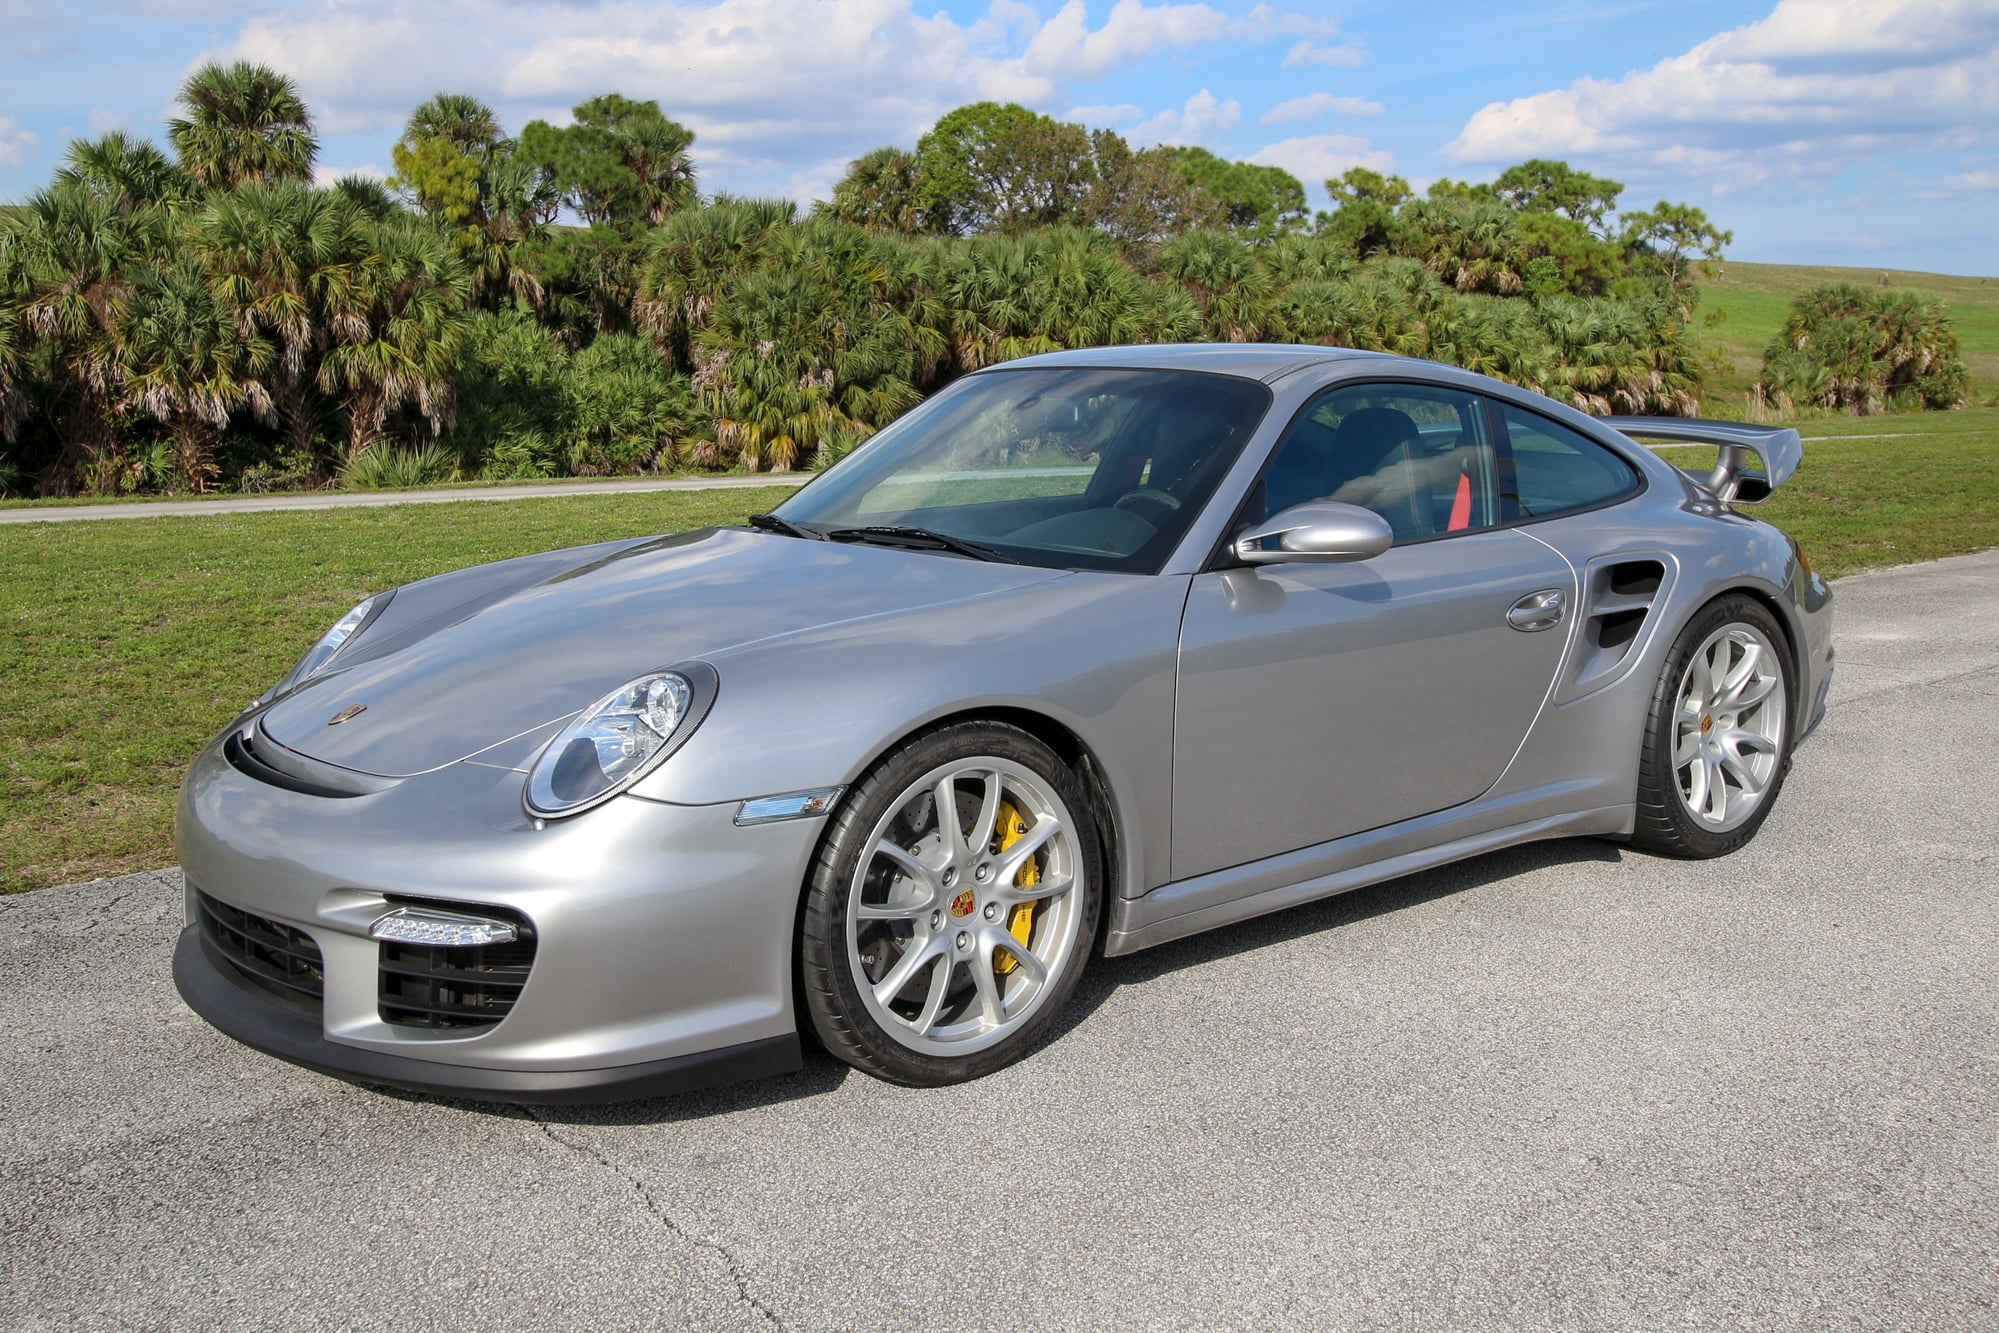 2008 Porsche 911 - 2008 Porsche 911 GT2 - 14,581 miles - Used - VIN WP0AD29958S796248 - 14,581 Miles - 6 cyl - 2WD - Manual - Coupe - Silver - Riviera Beach, FL 33407, United States